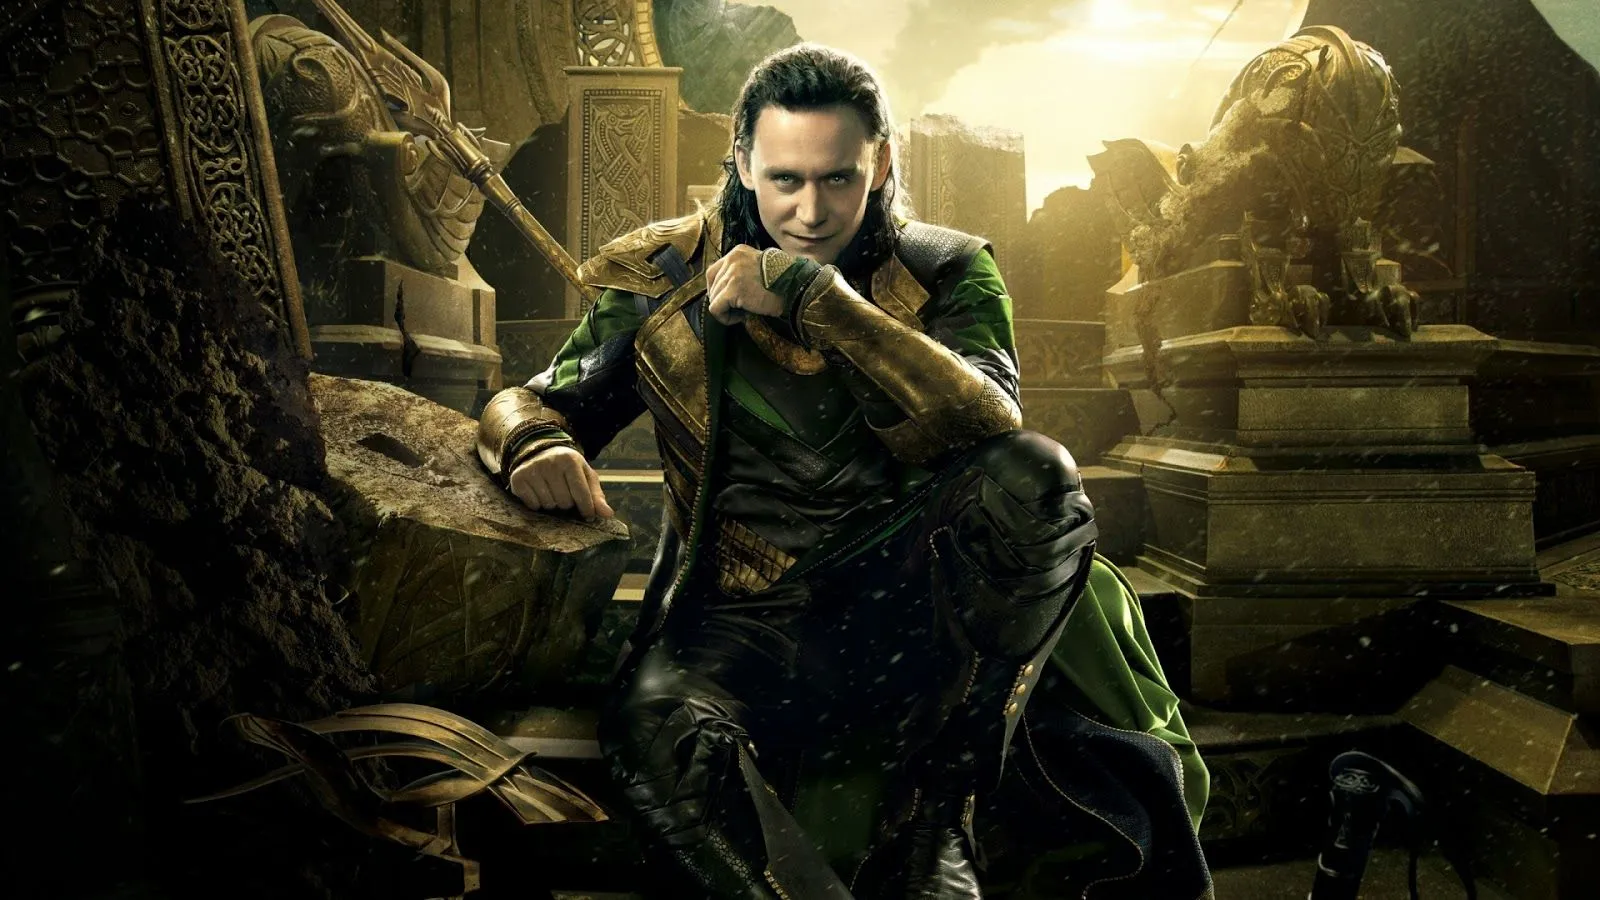 Loki Thor 2 The Dark World 2013 c11 HD Wallpaper